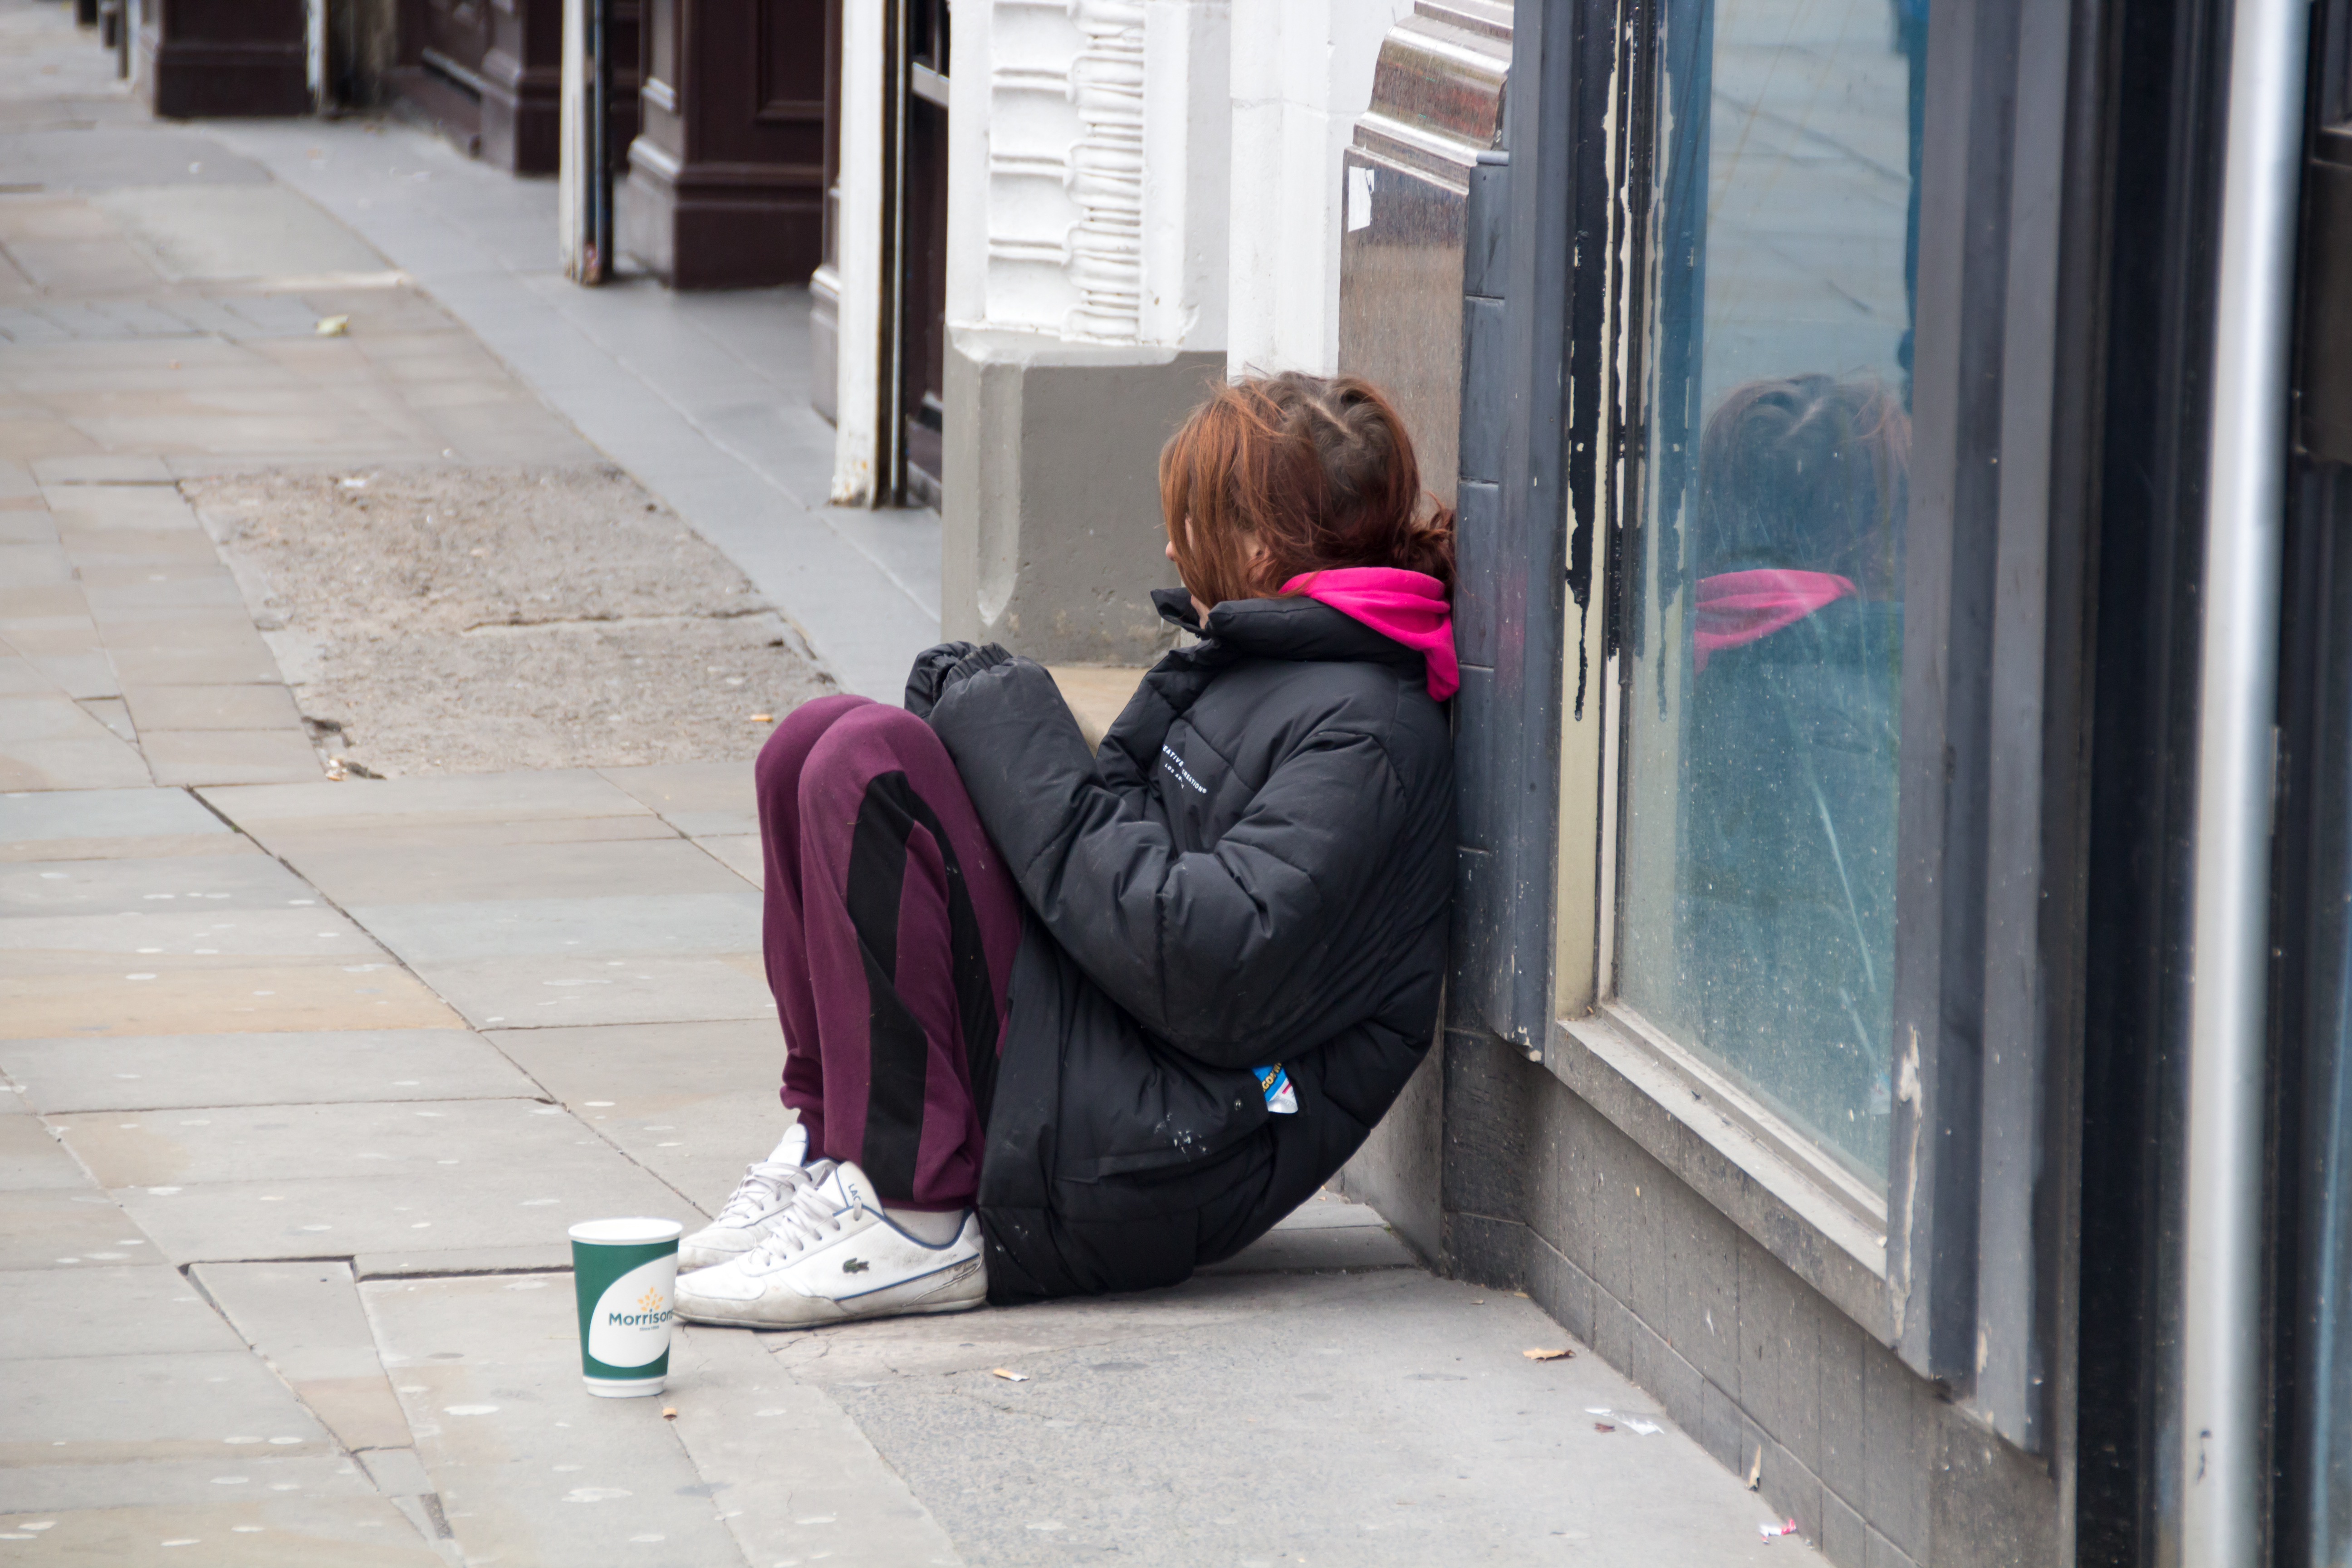 Obdachloses Mädchen | Quelle: Shutterstock